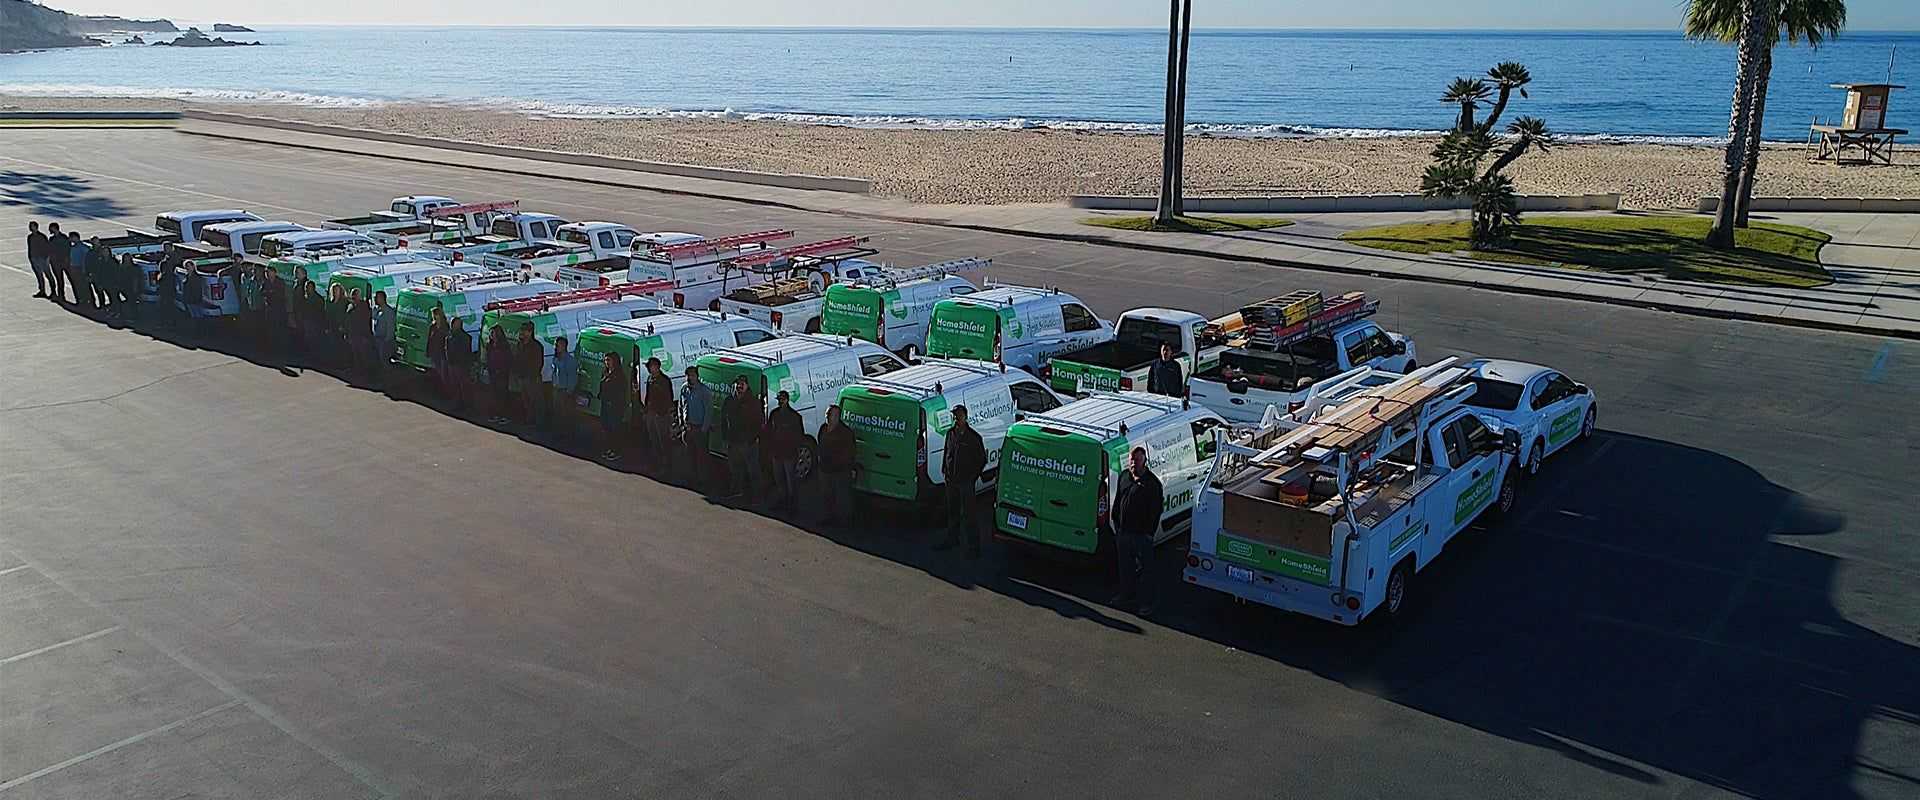 homeshield company trucks near the beach